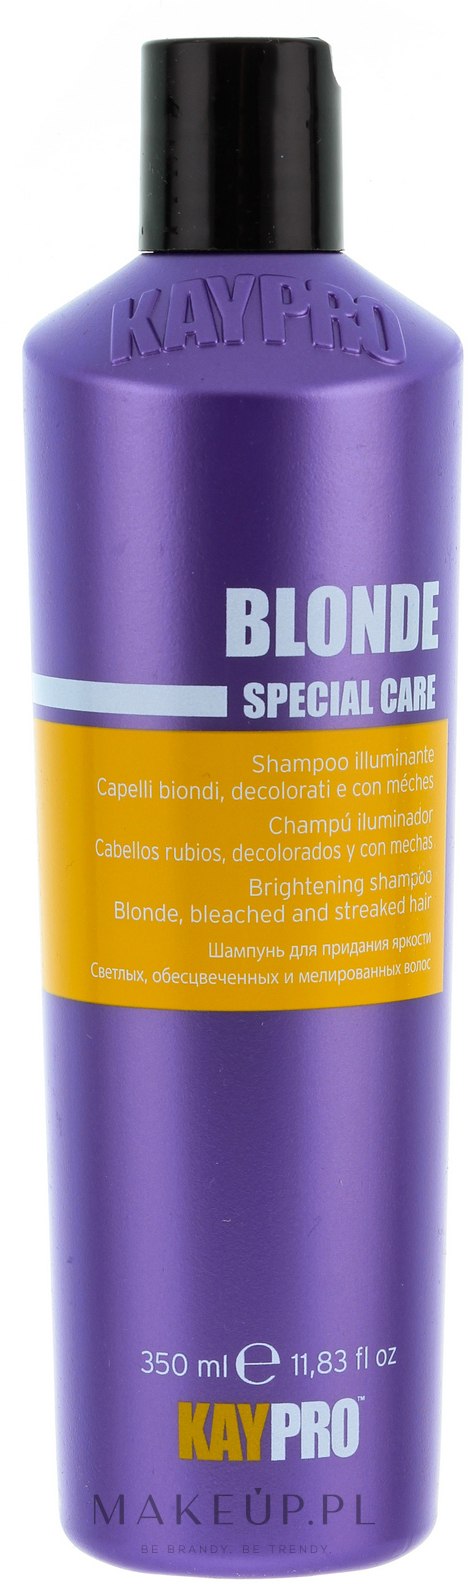 szampon kaypro blonde 350 ml